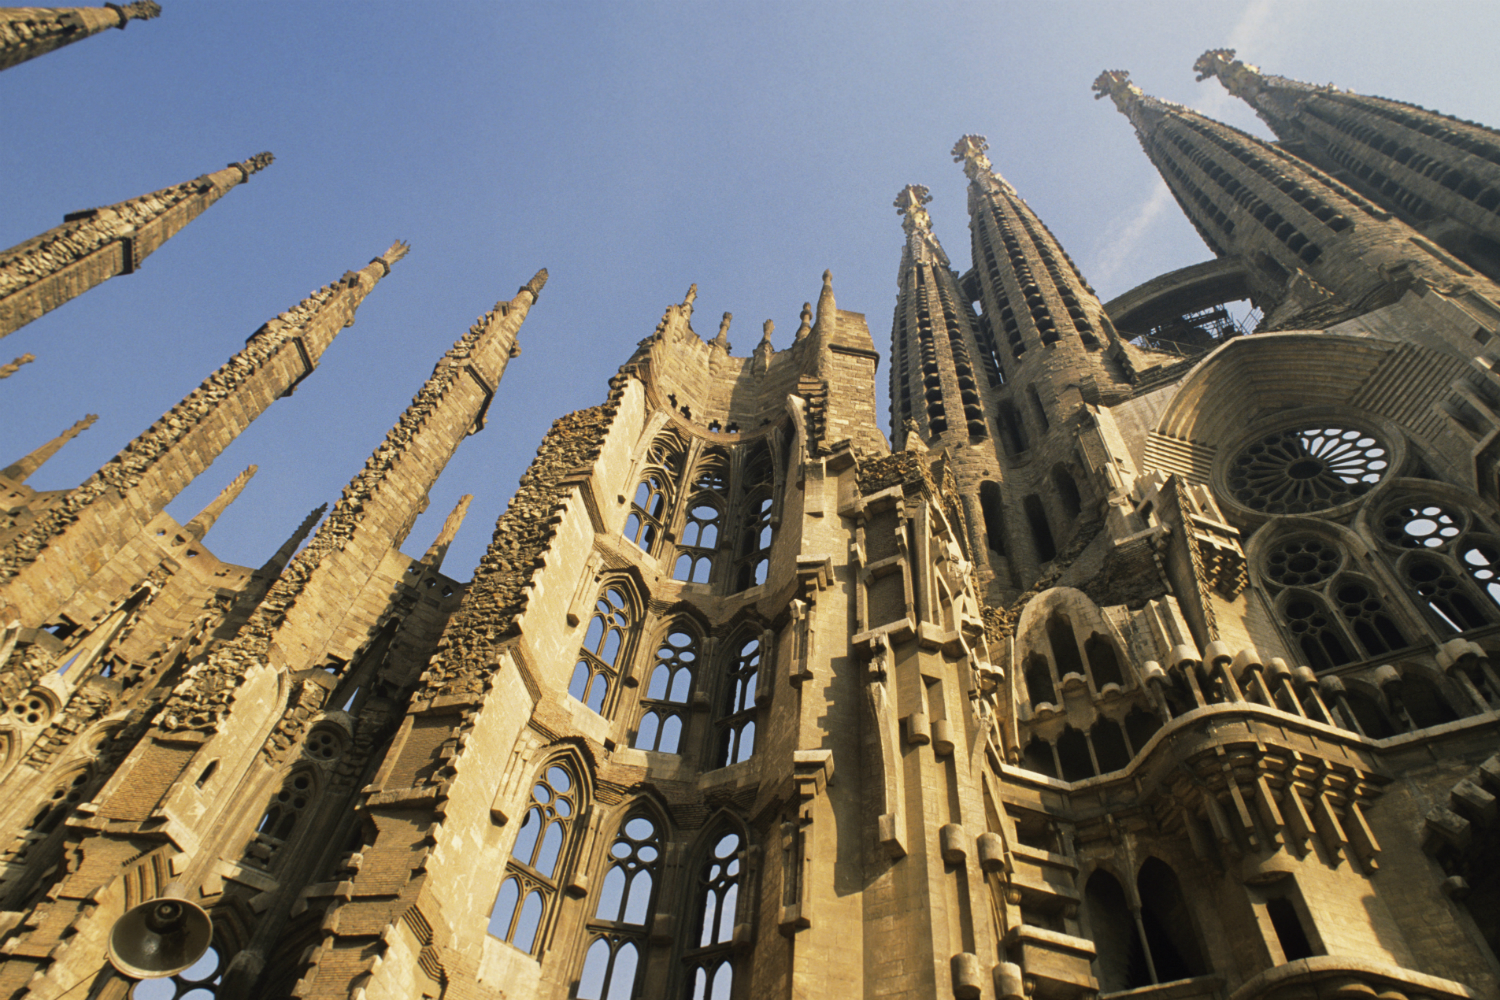 TTG - Travel industry news - Barcelona most popular destination for ...